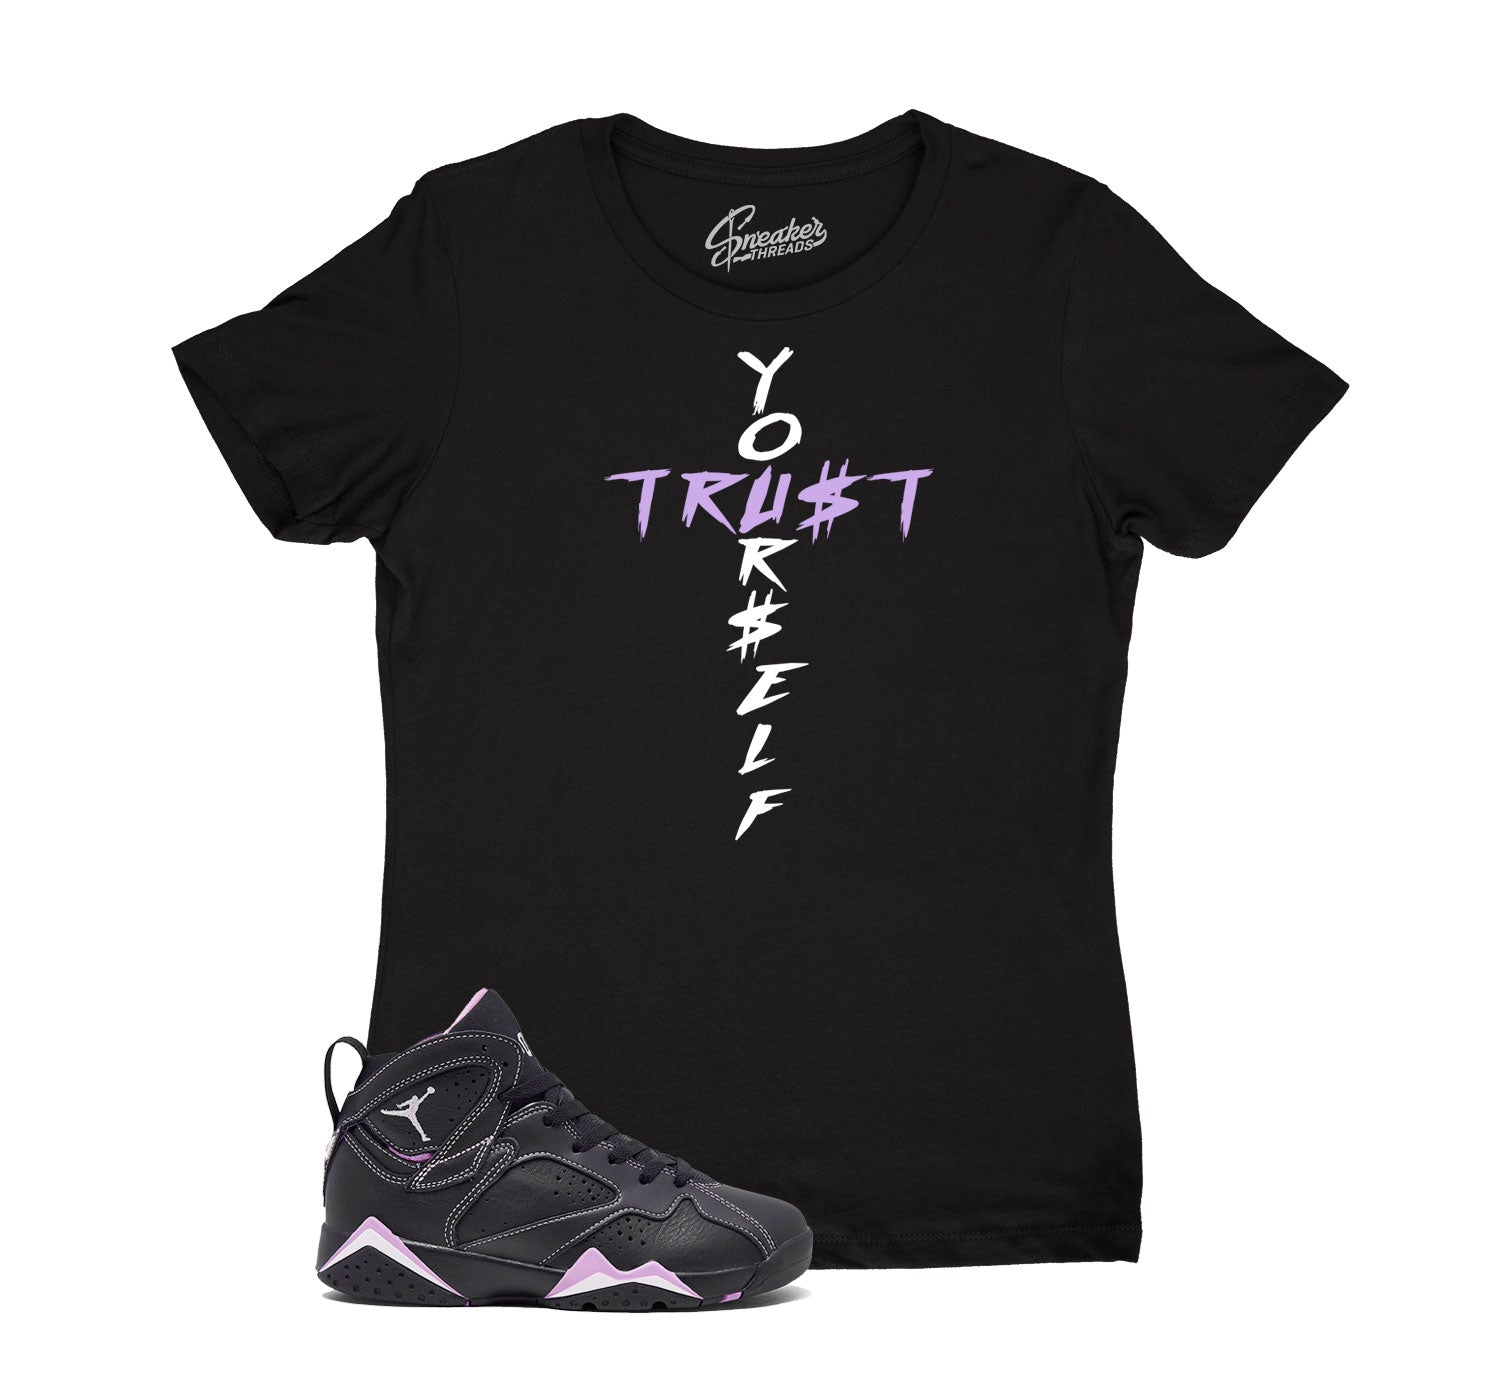 Womens Barely Grape 7 Shirt - Trust Yourself - Black